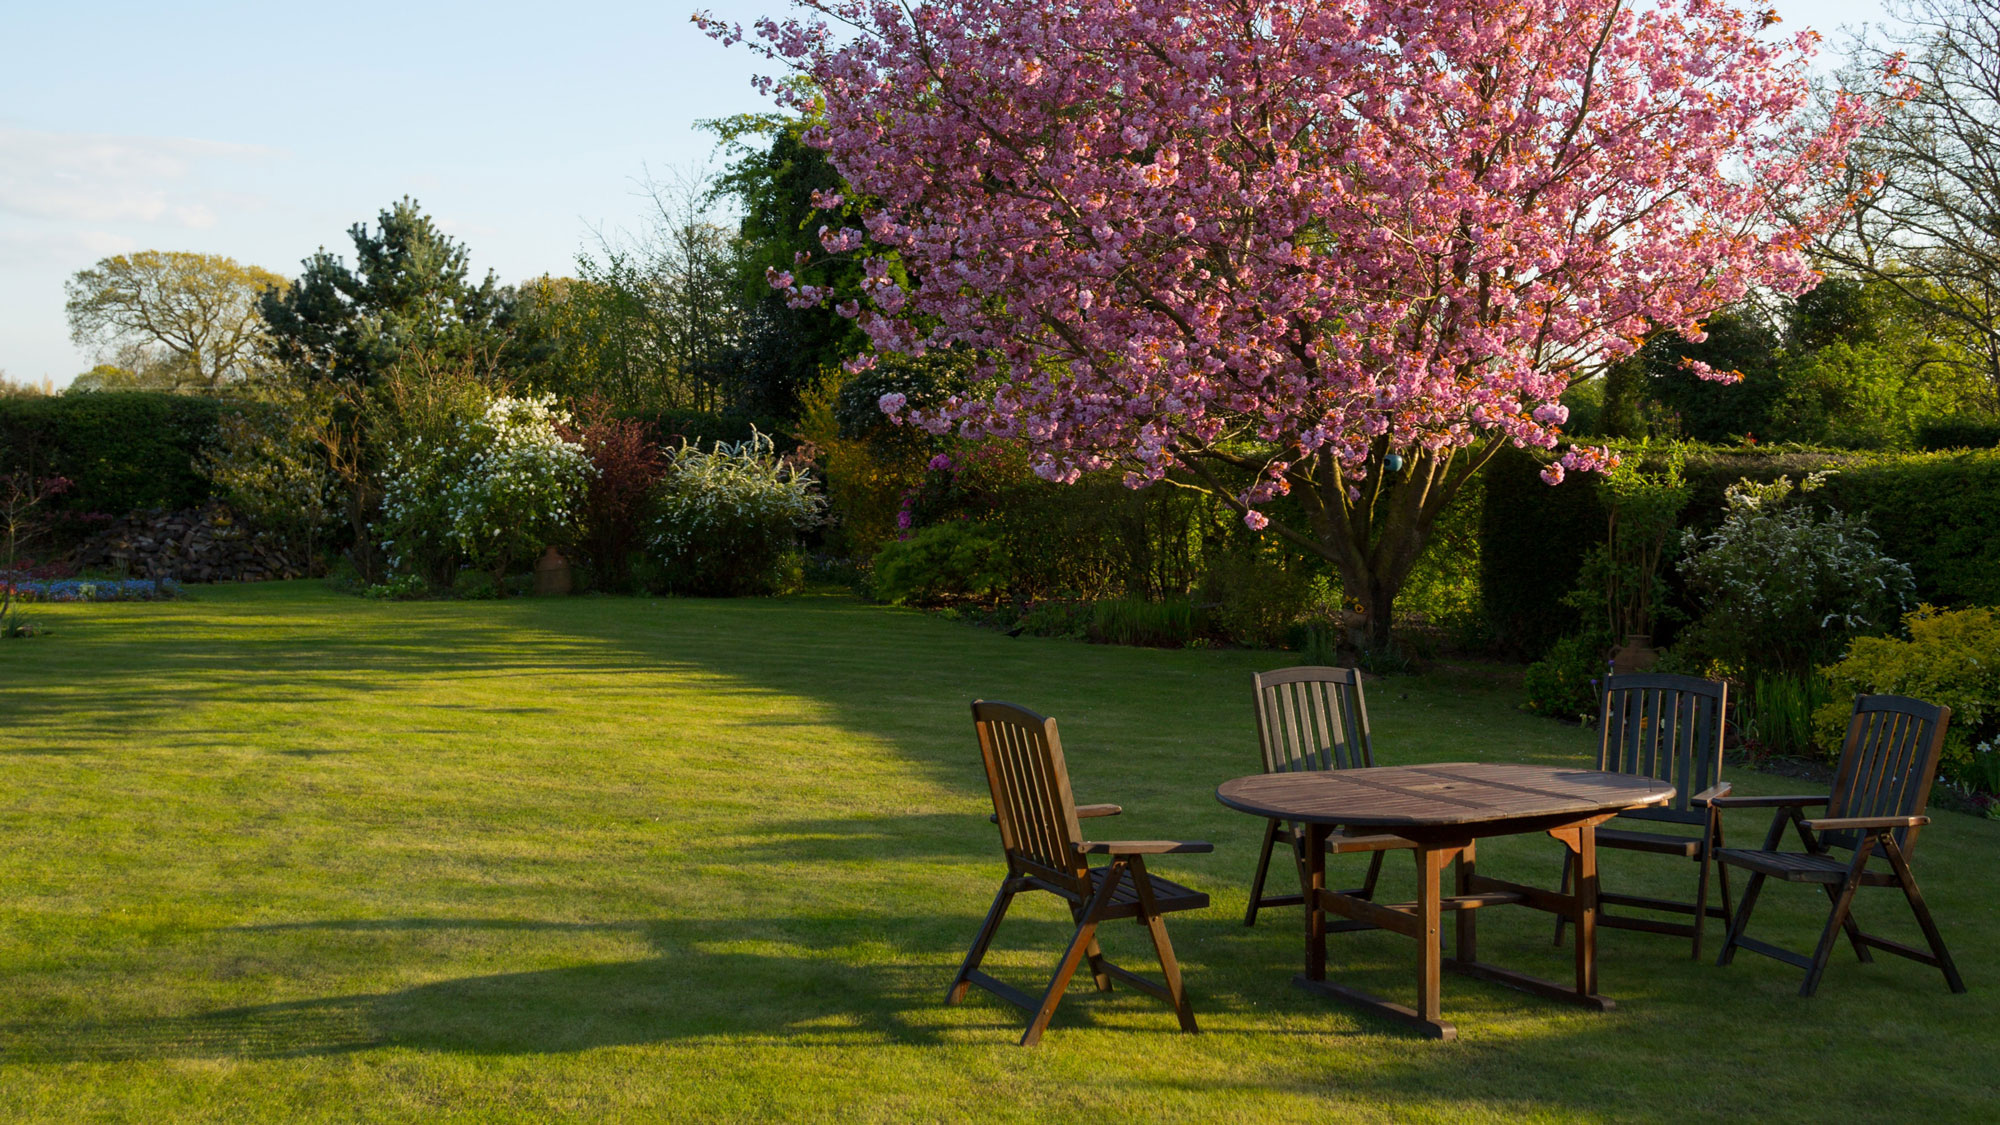 Acondiciona un espacio agradable en tu terraza o jardín